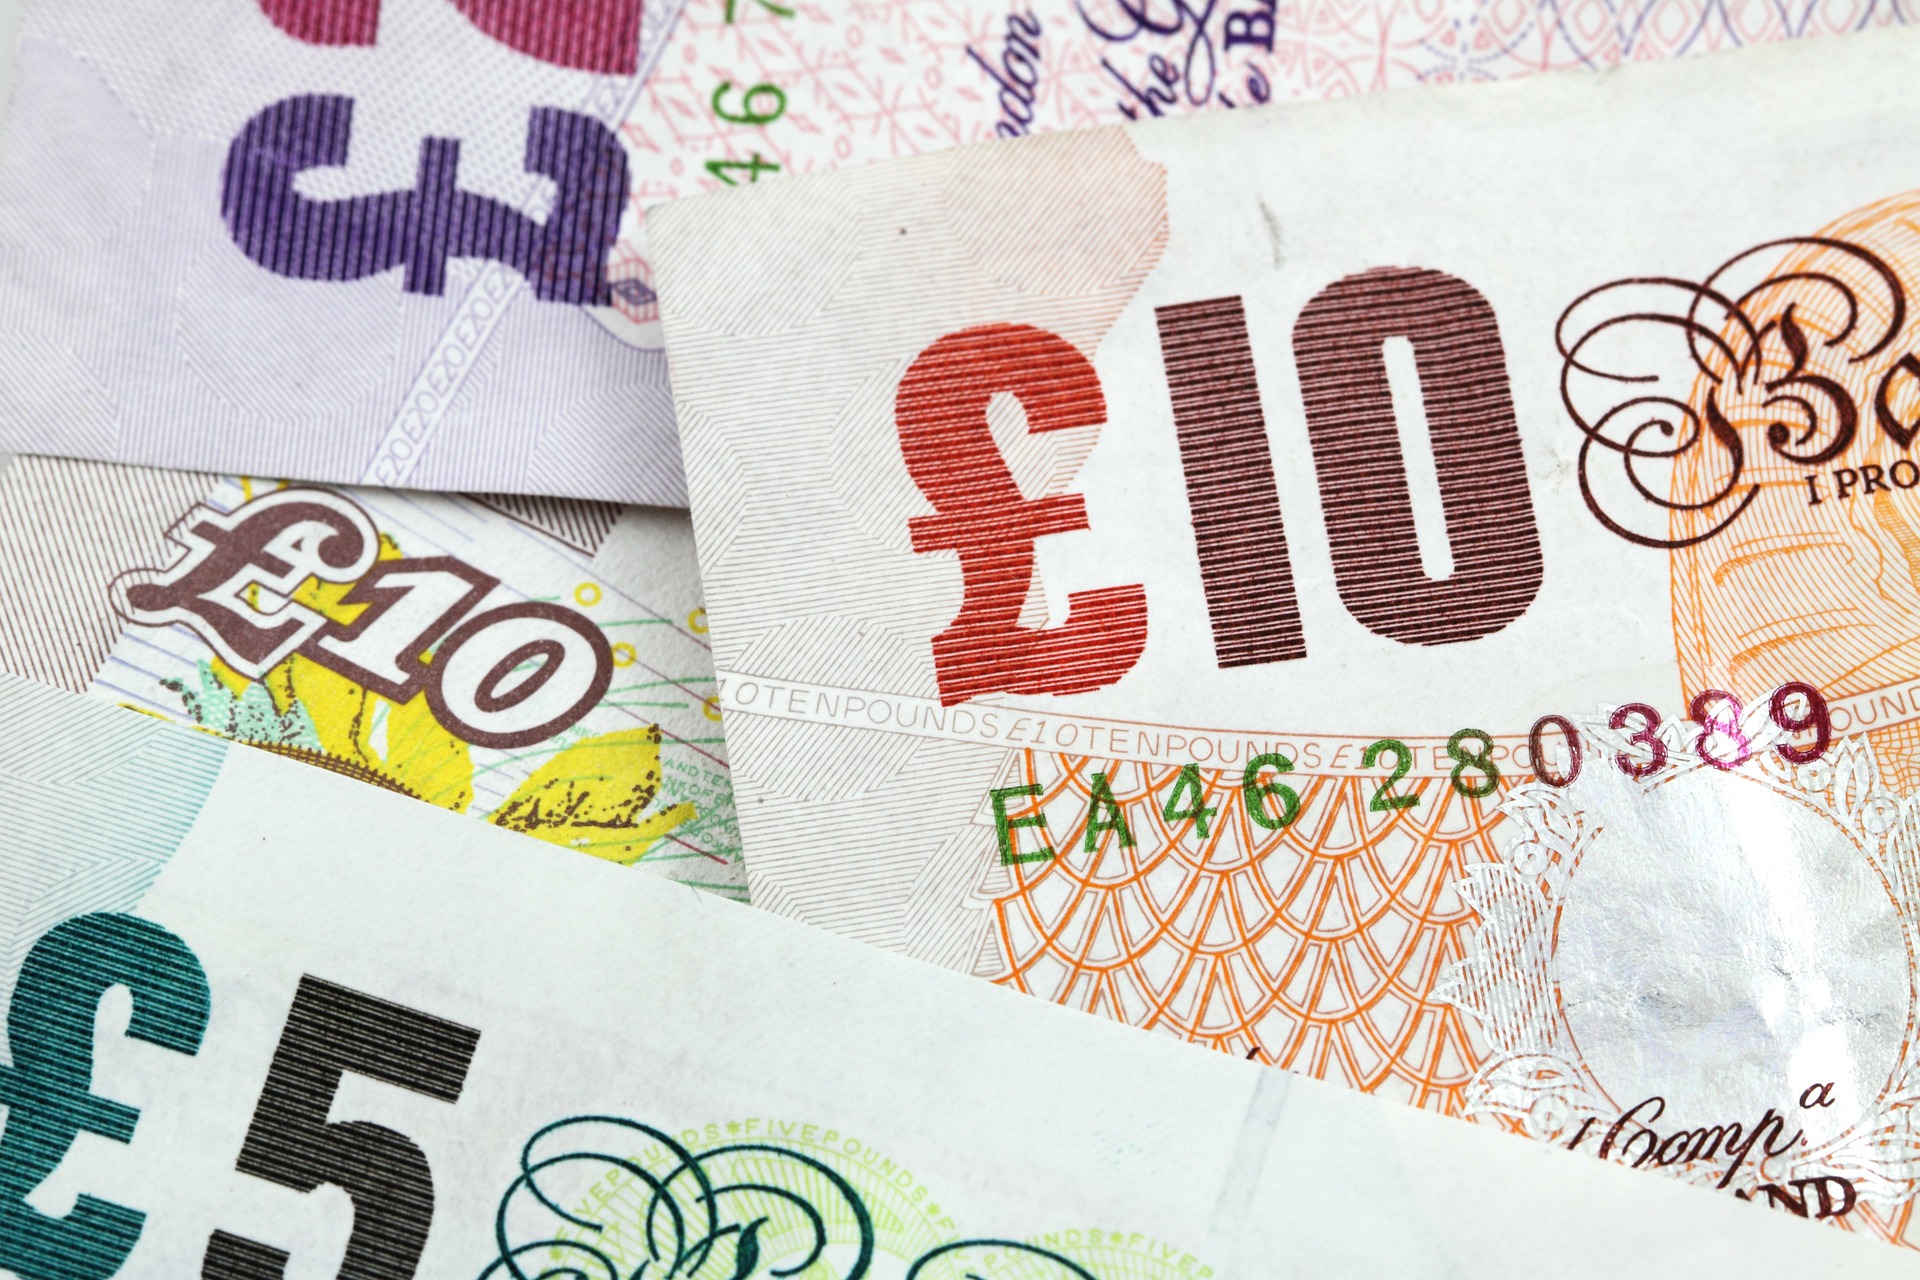 Bank fined £1m by Isle of Man regulator